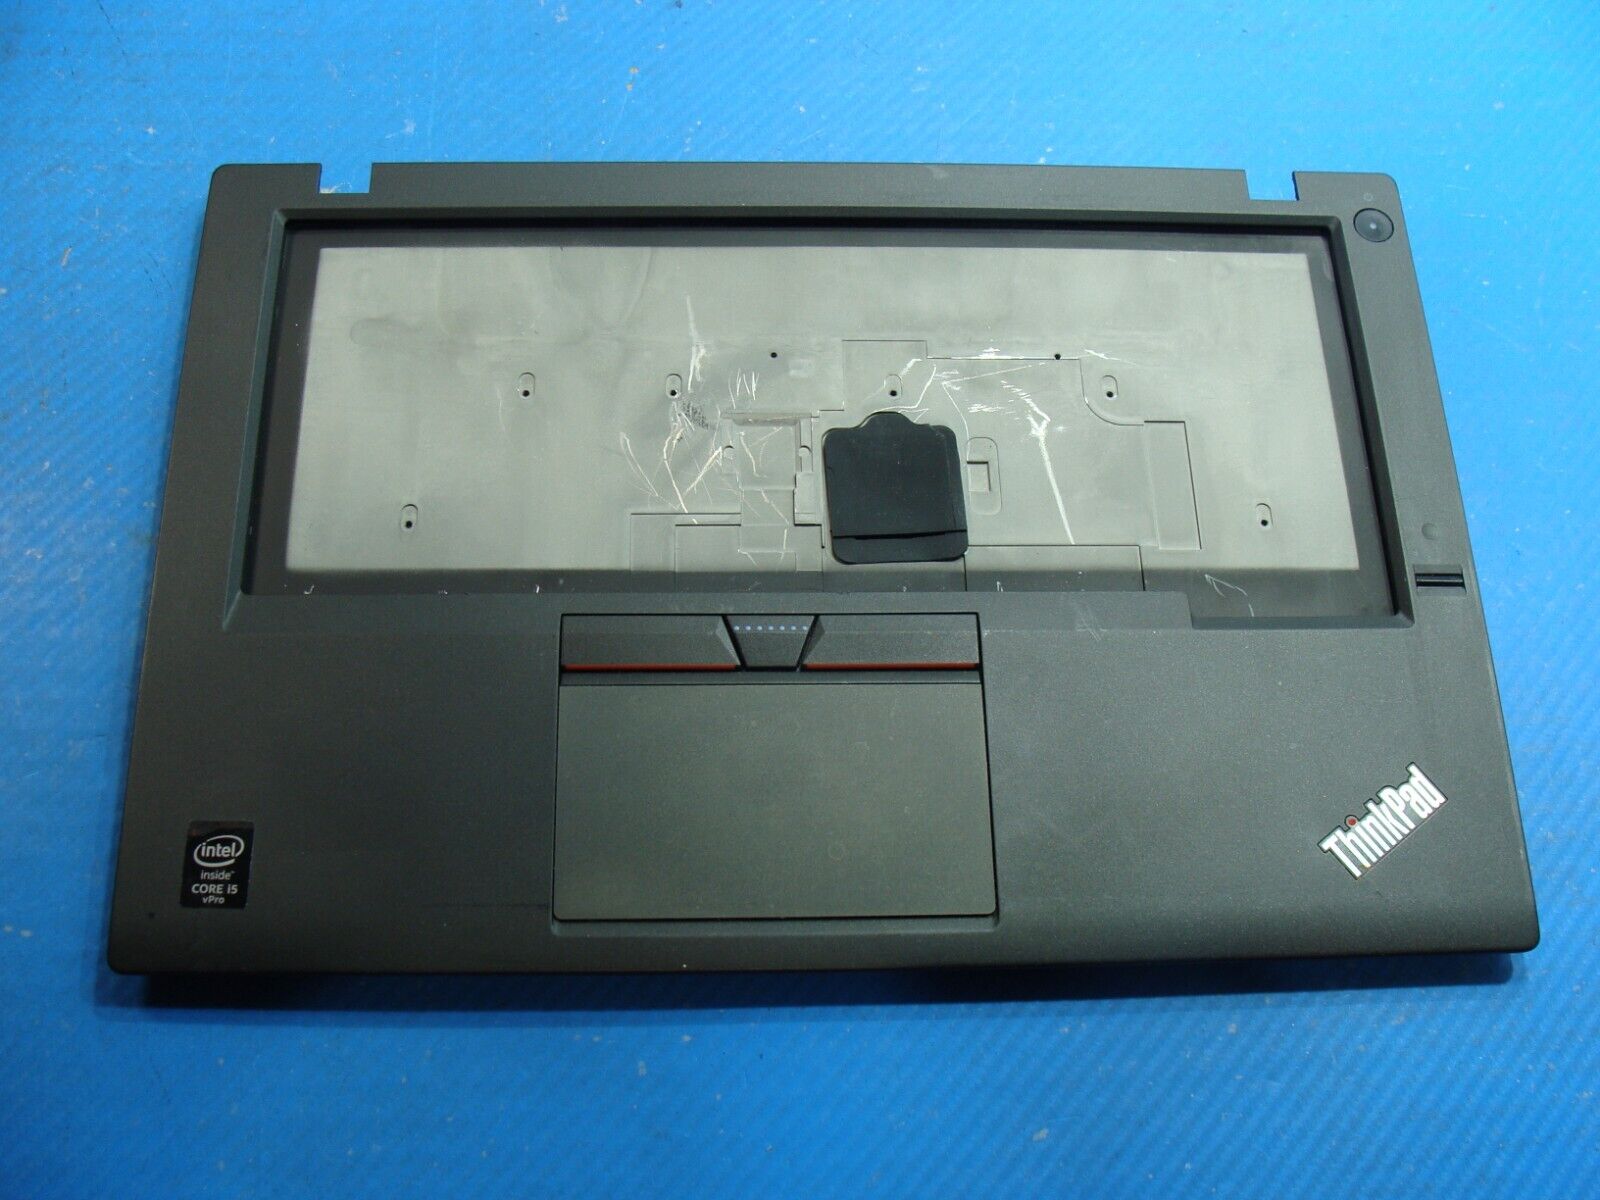 Lenovo ThinkPad 14” T450s OEM Laptop Palmrest w/TouchPad AM0TW000600 SB30H33205